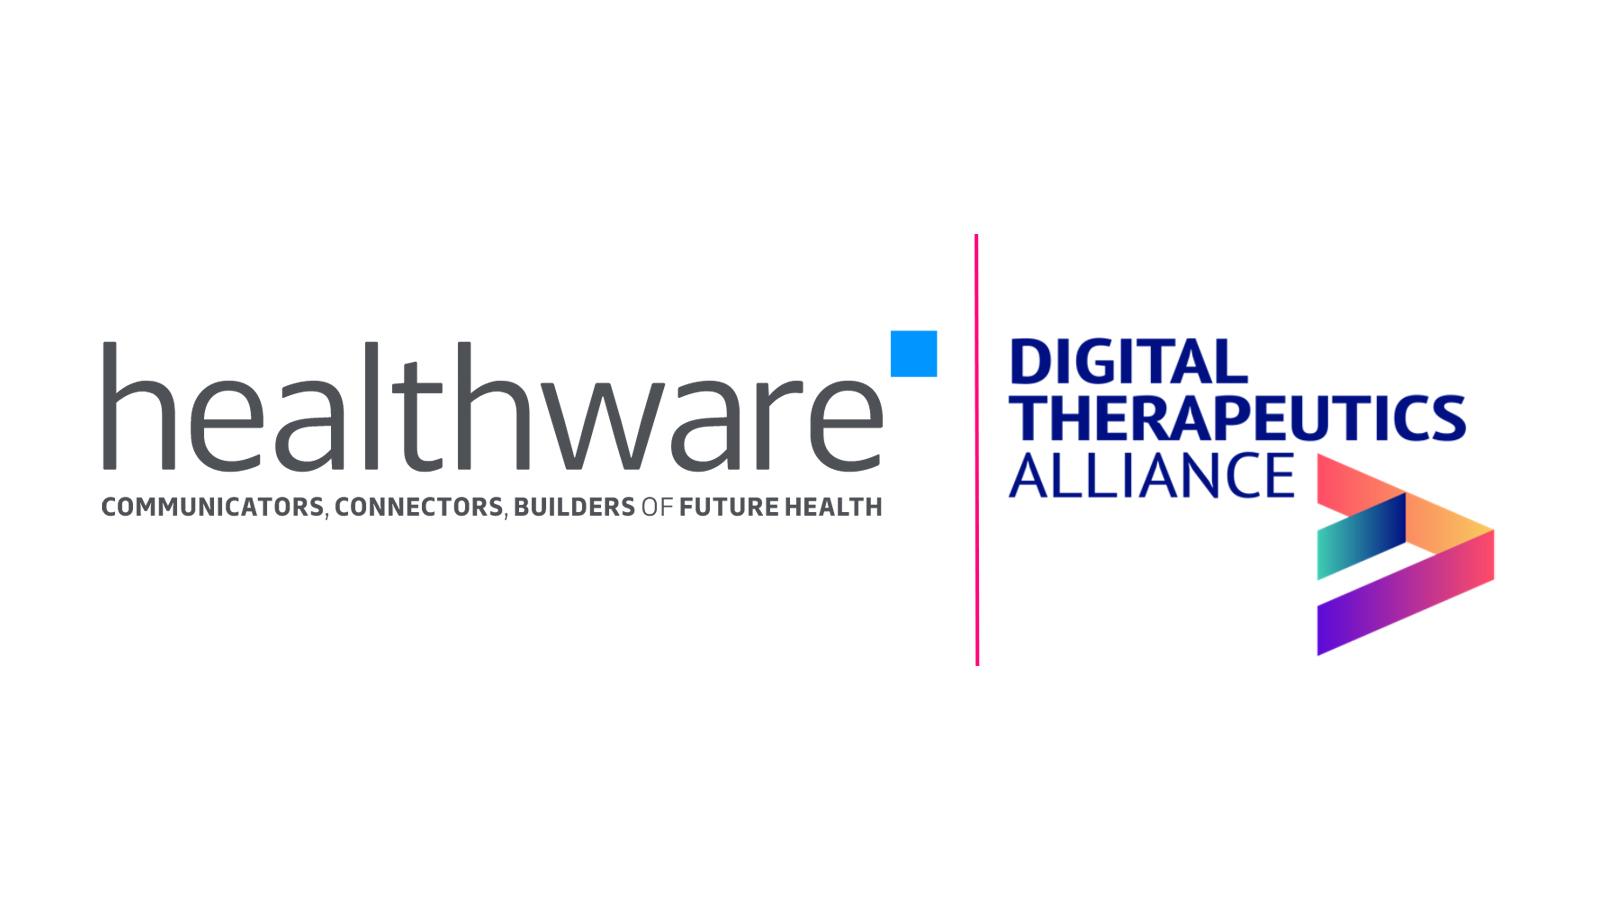 Healthware Group and Digital Therapeutics Alliance